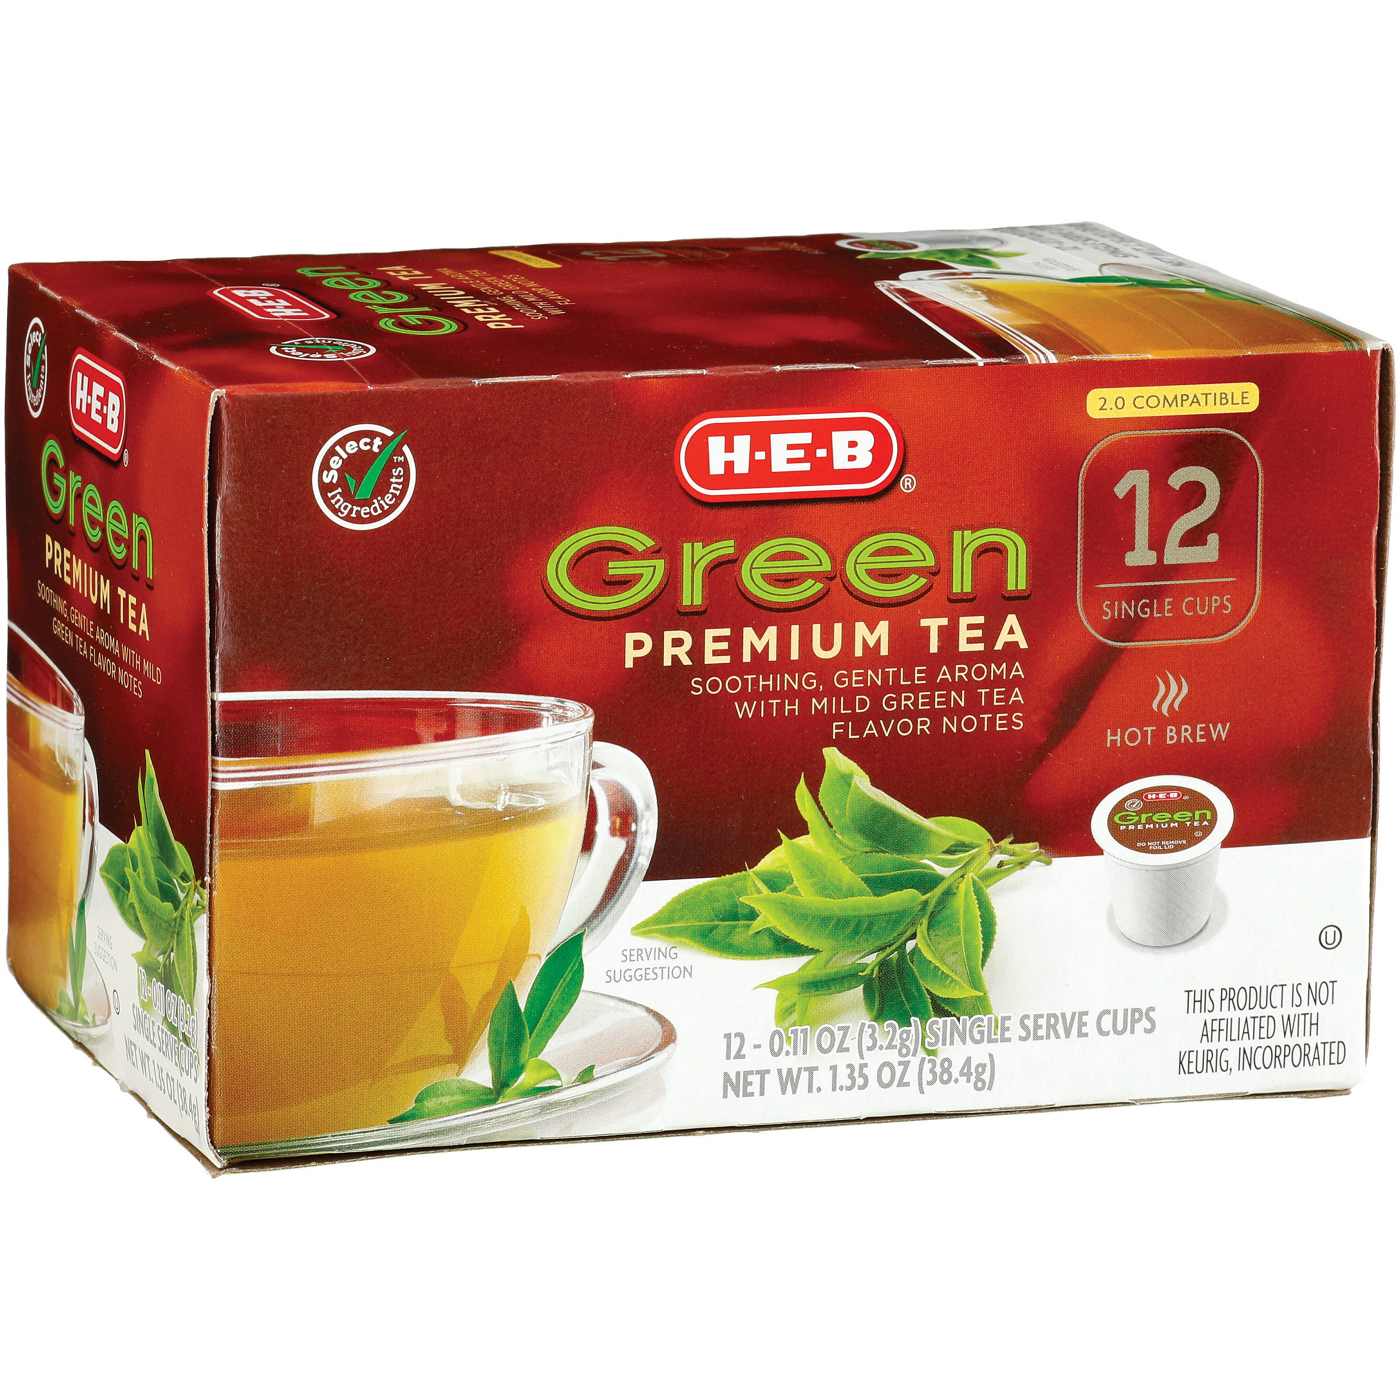 H-E-B Green Tea Single Serve Cups; image 2 of 2